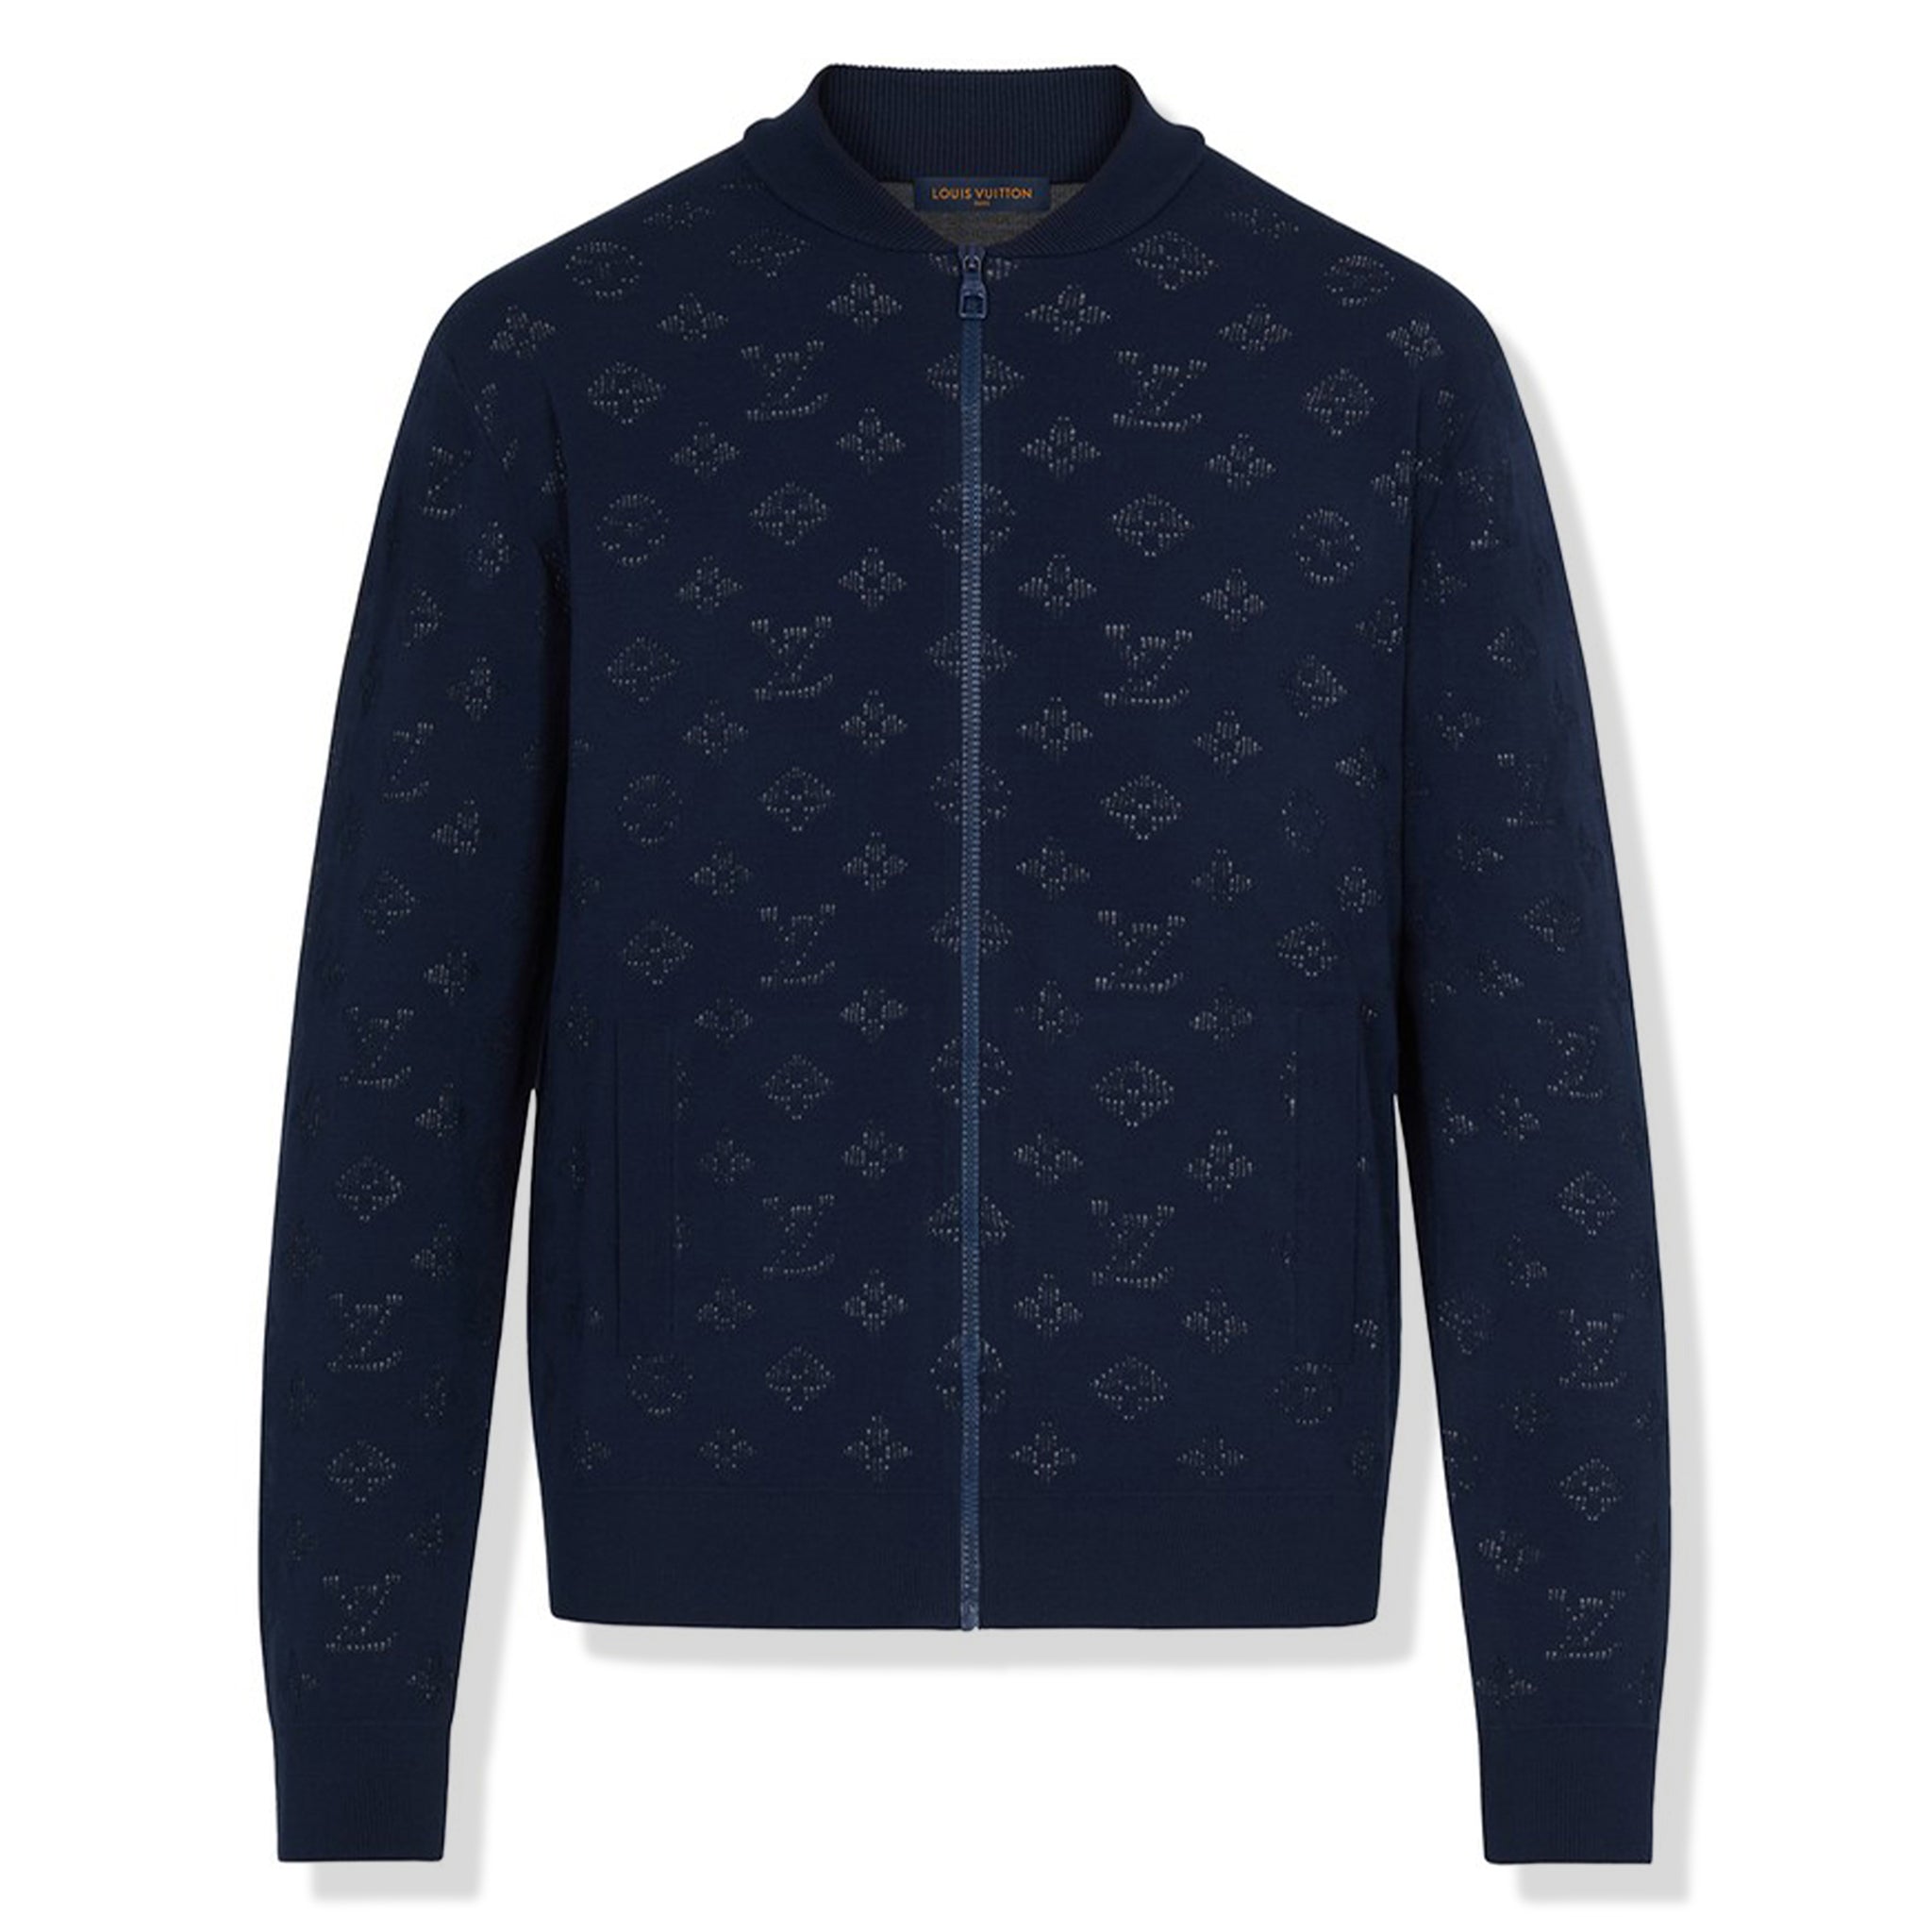 Louis Vuitton Monogram Jacquard Sweater Blue AUTHENTIC FROM JAPAN